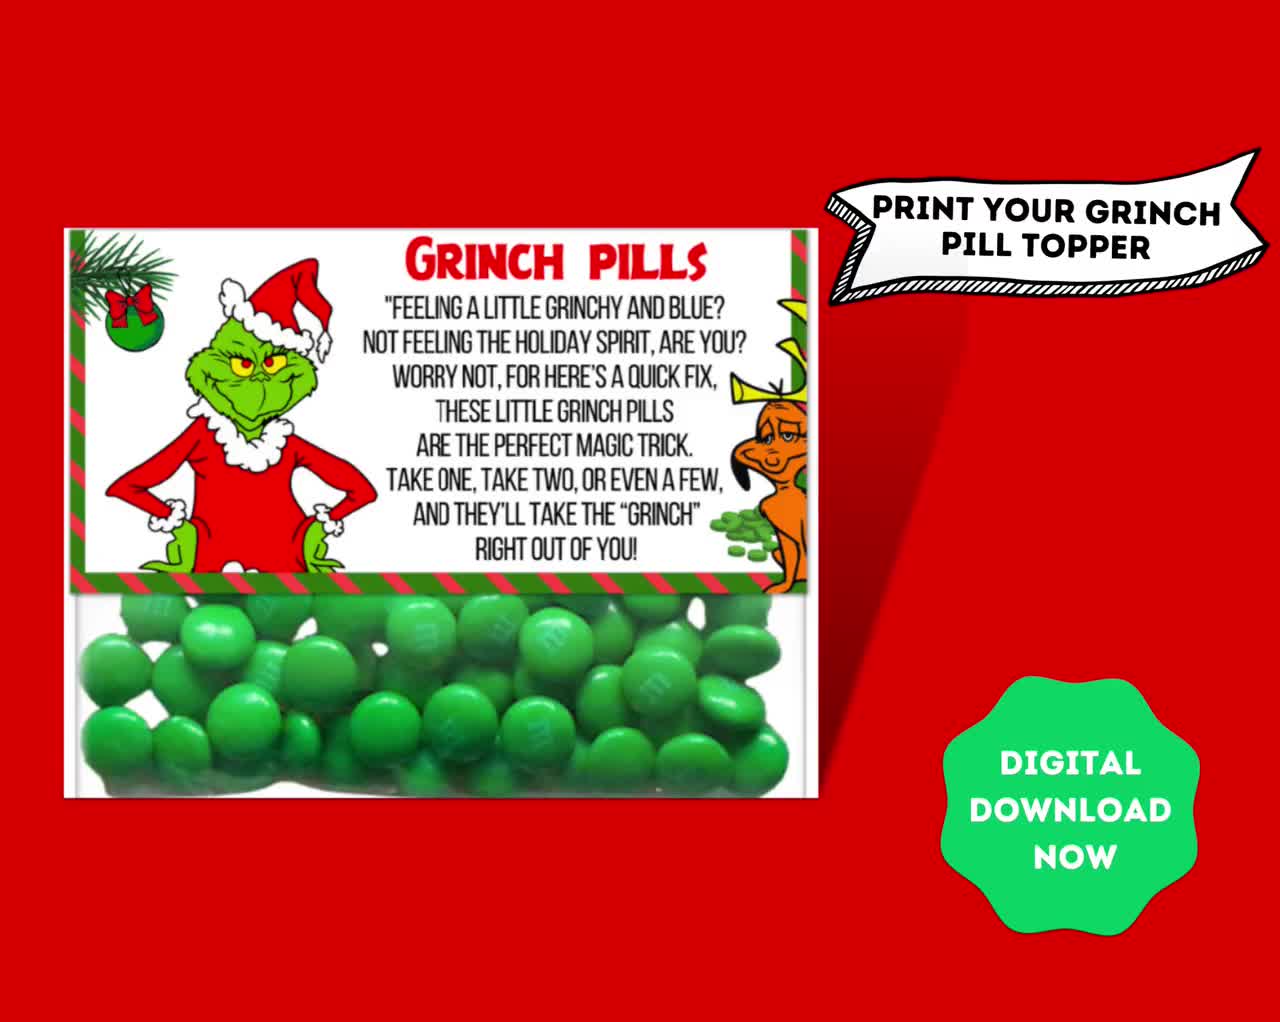 Grinch Gift Exchange Game – Sunshine And Rainy Days